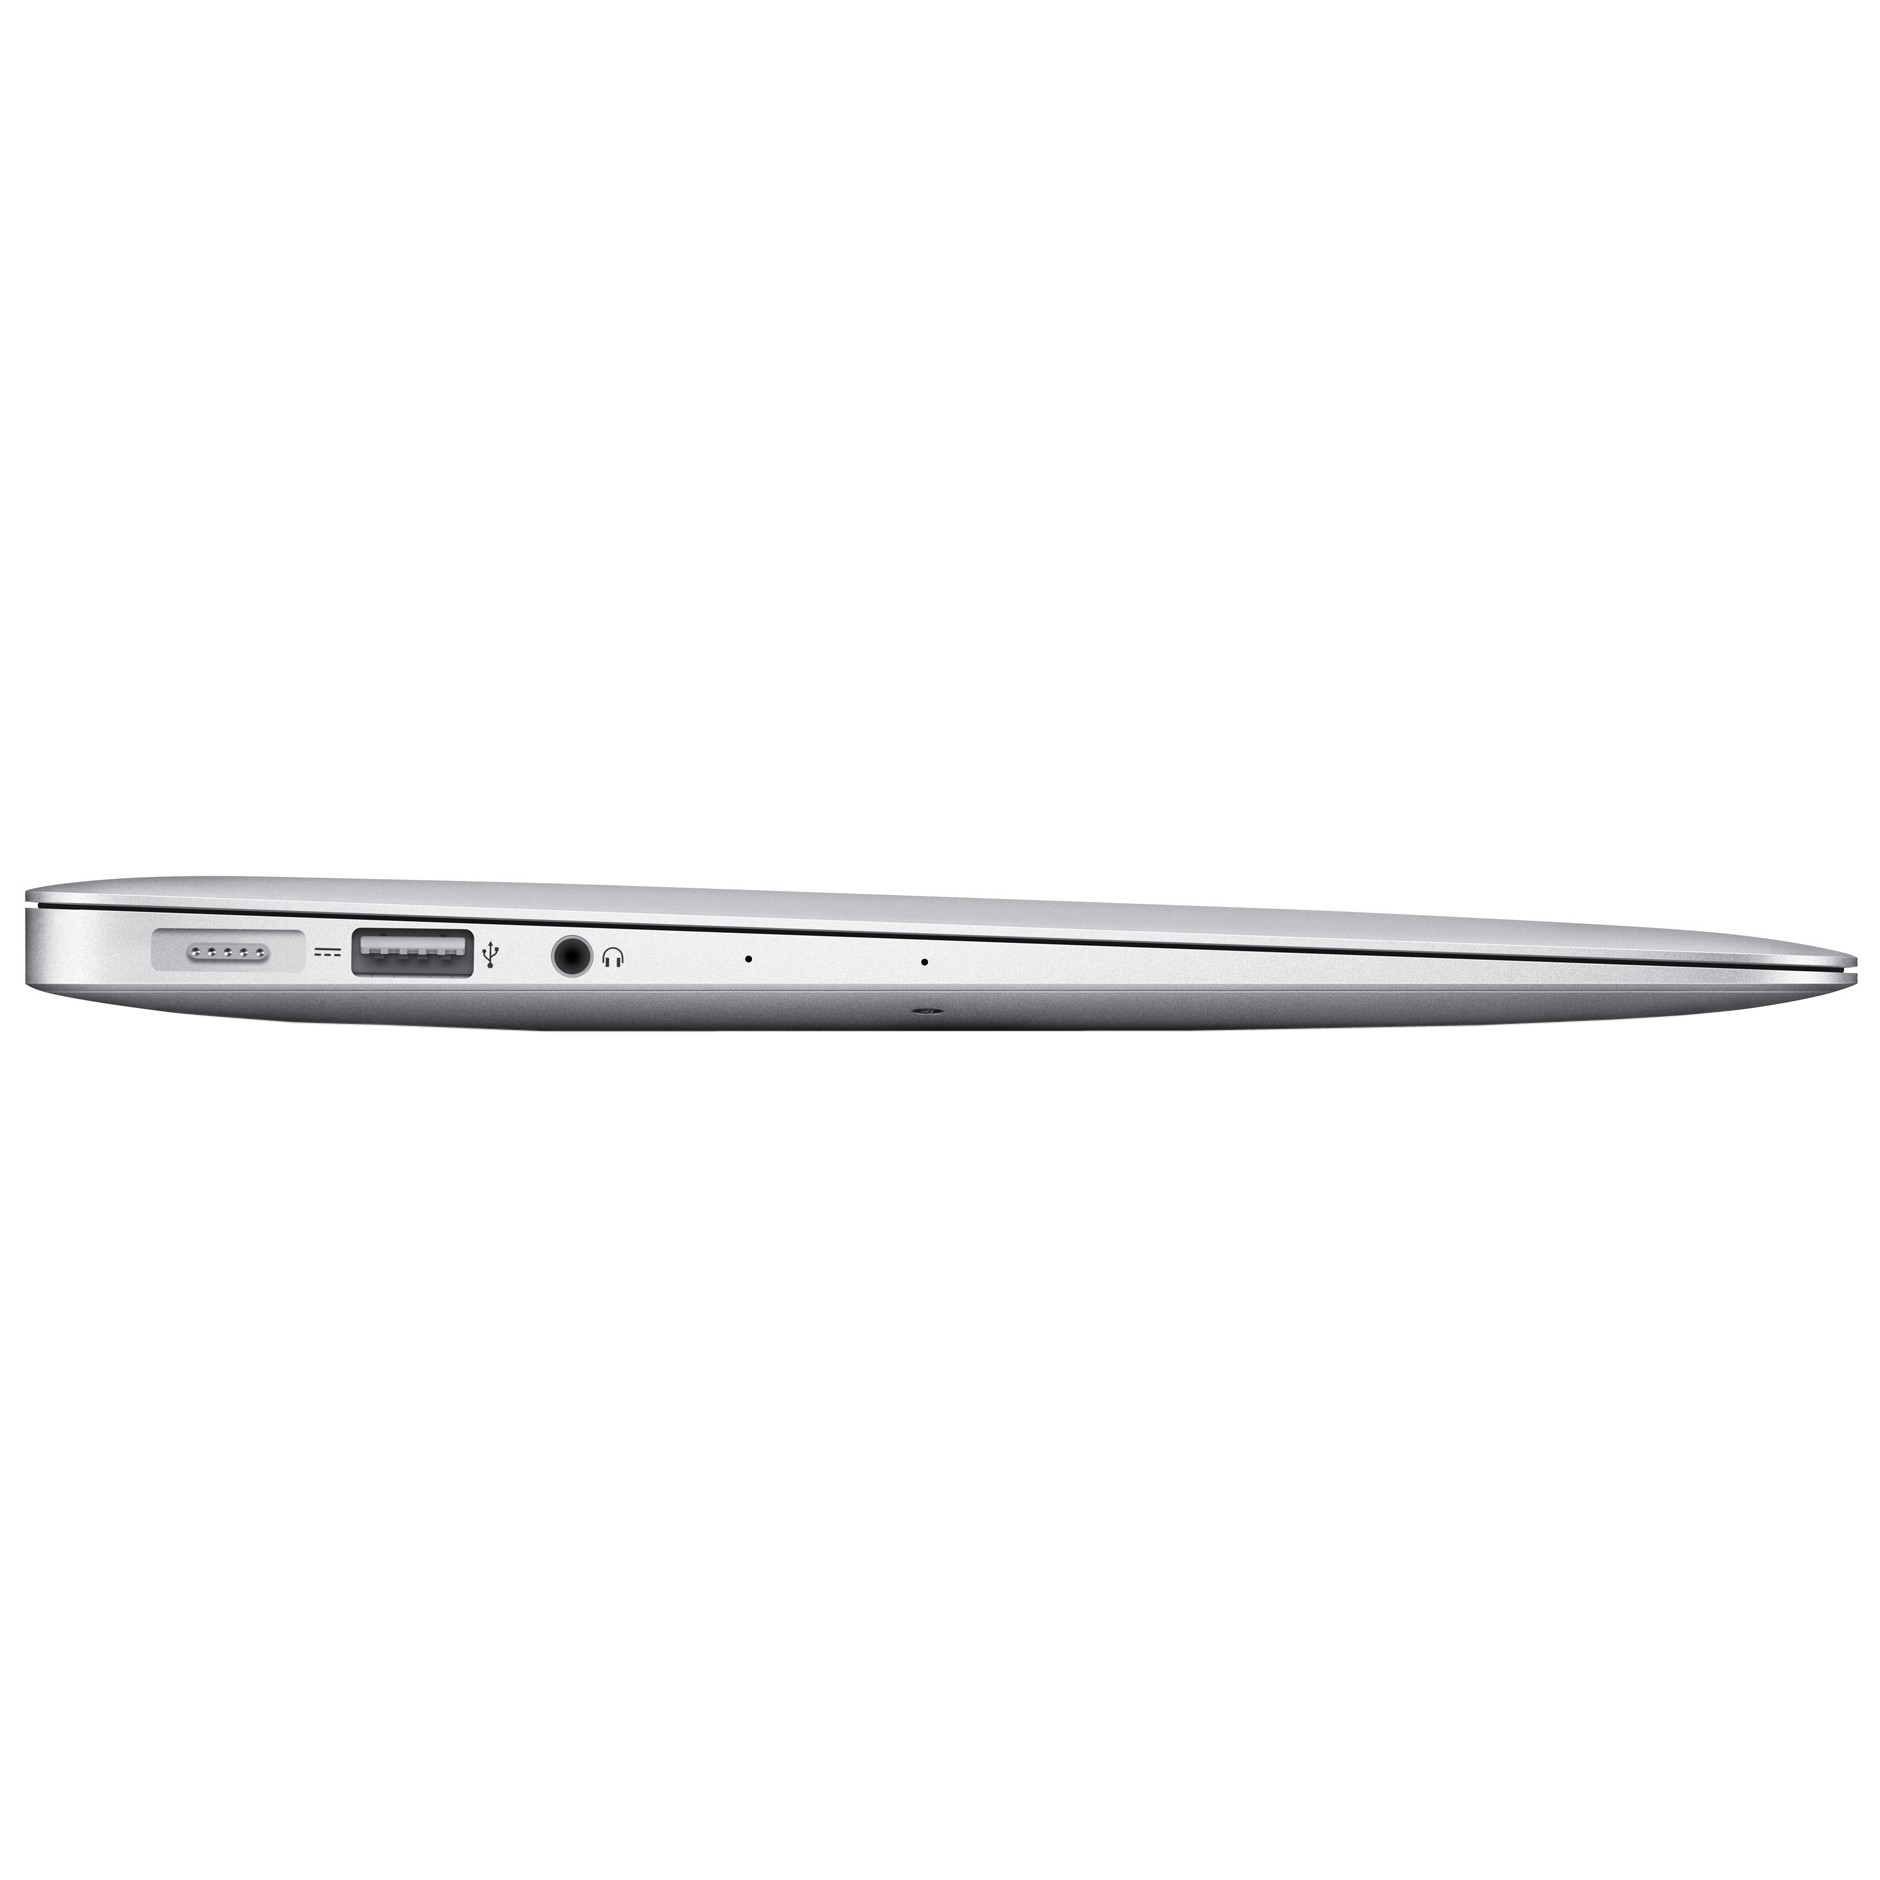 Apple MacBook Air 11 2015 (Z0RL00005)